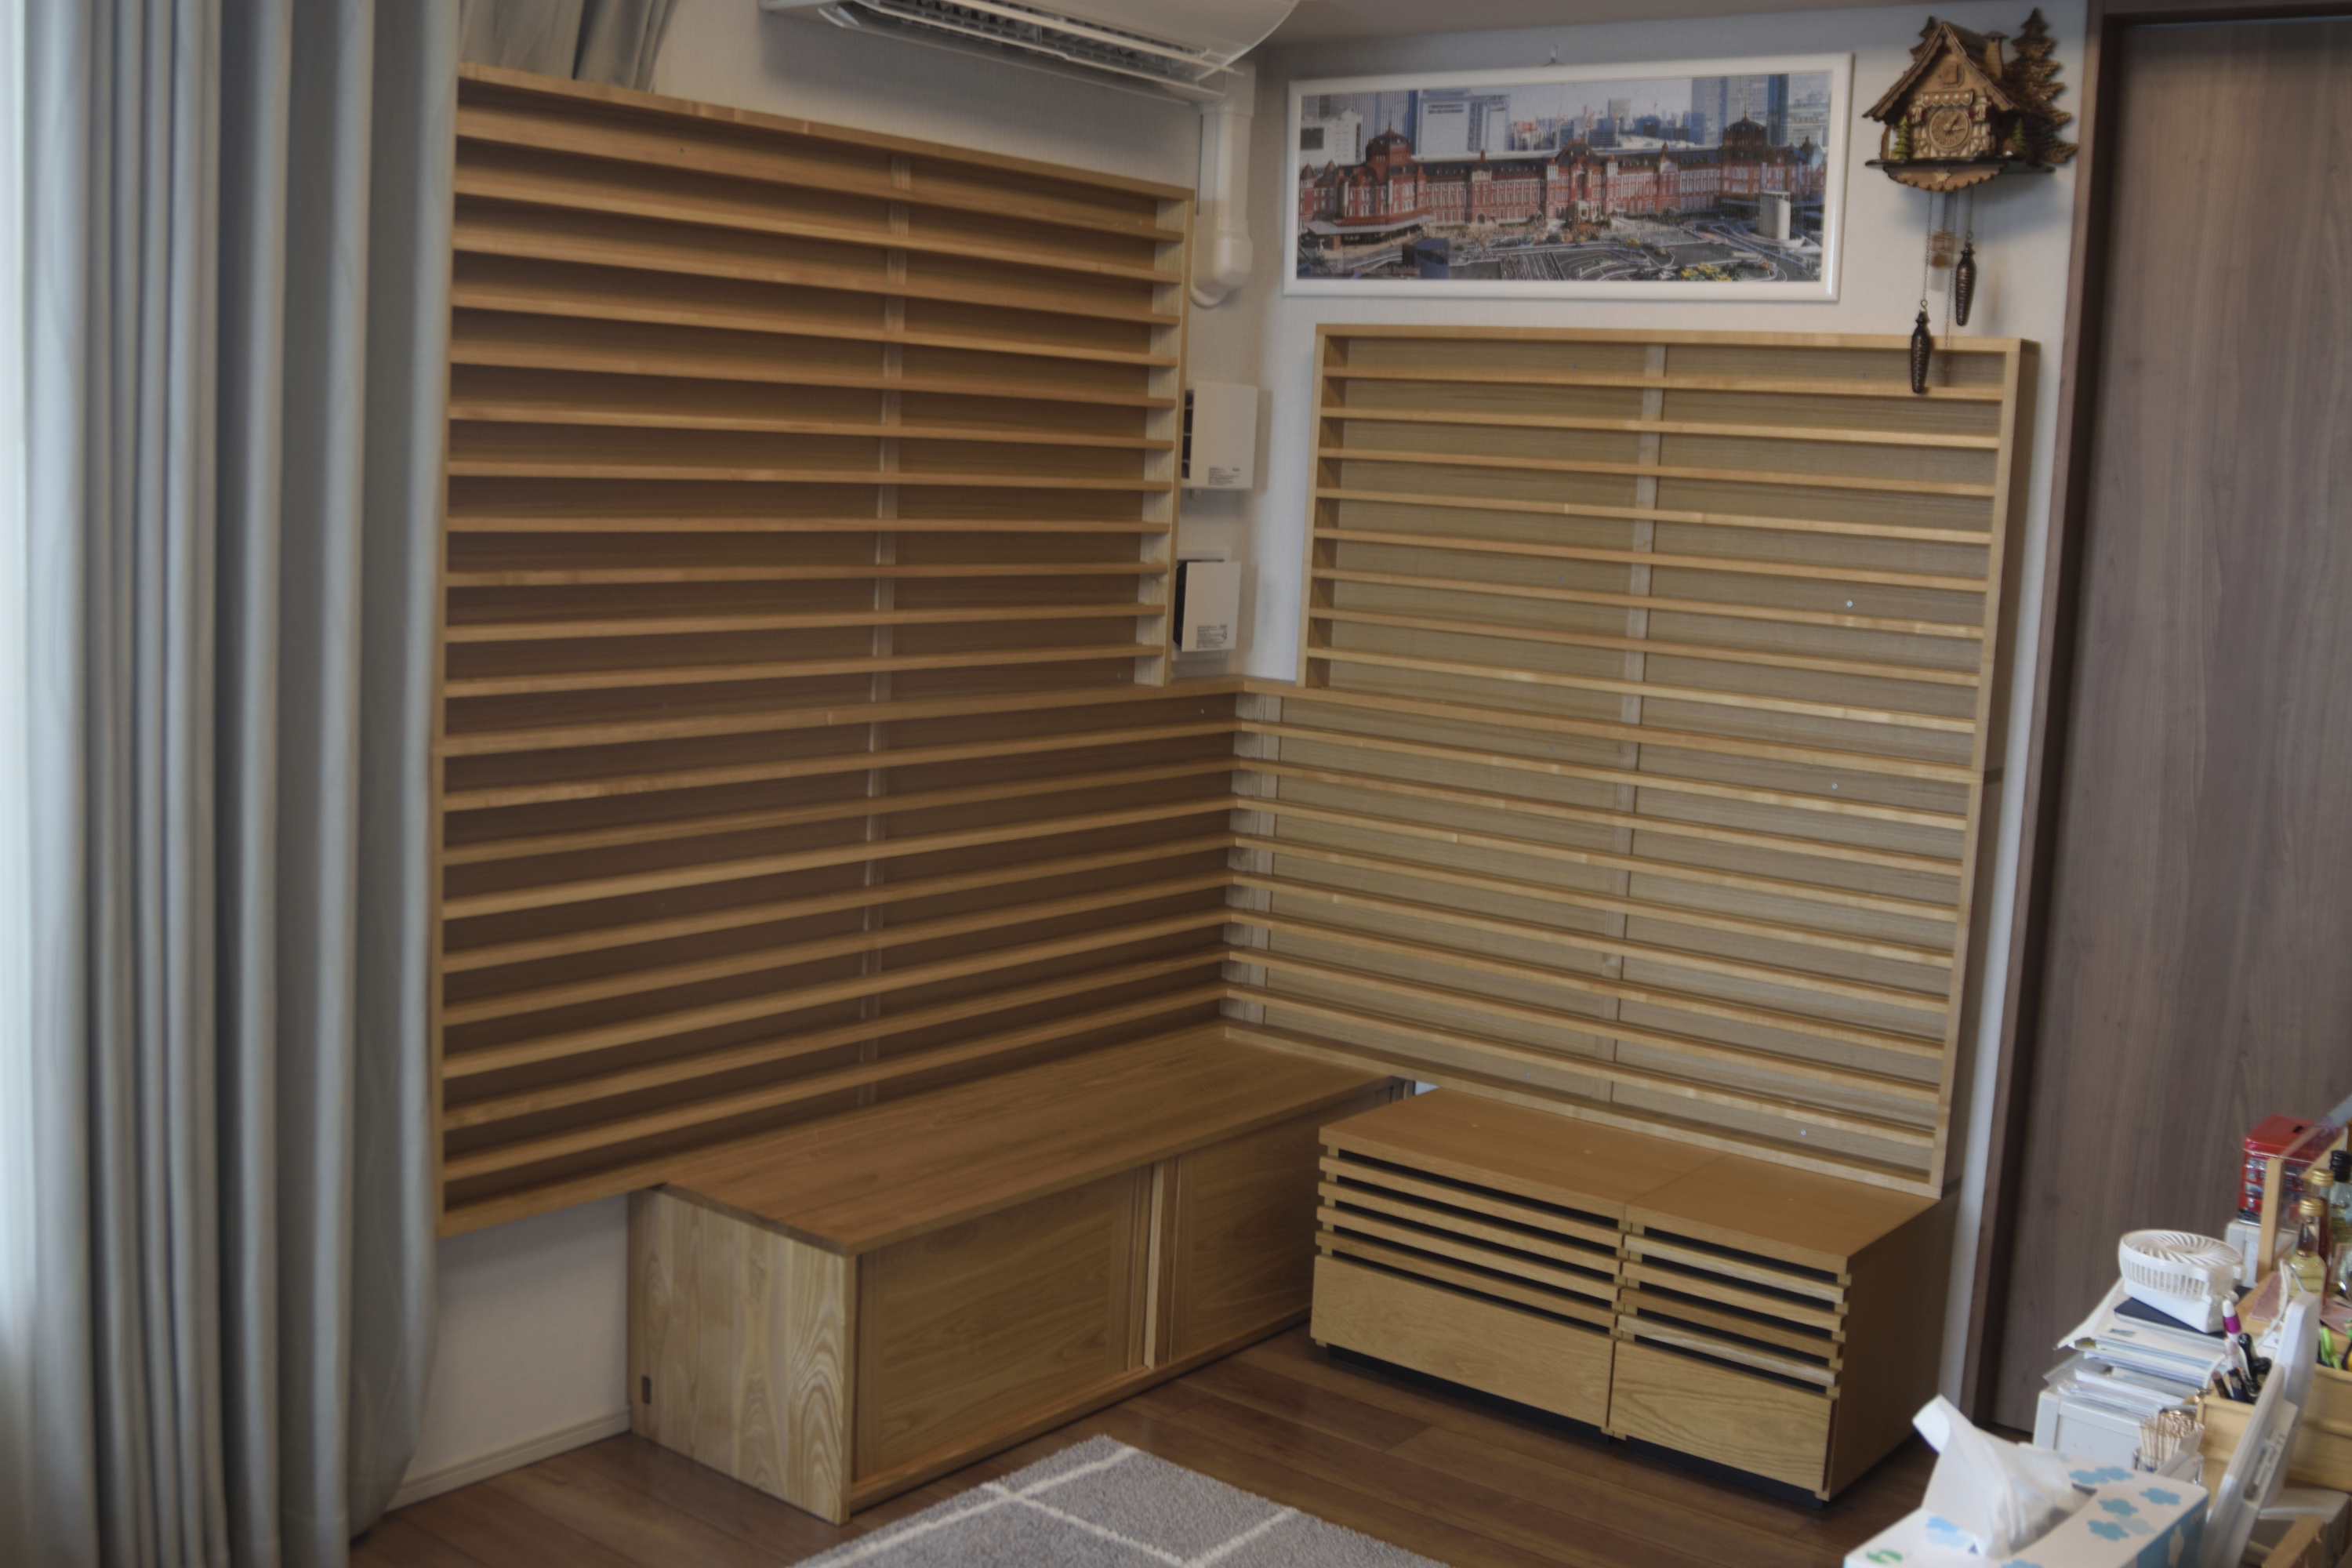 Nゲージ車両を収納するための Tana飾り棚 オーダー家具と無垢天板 東京 Woodwork